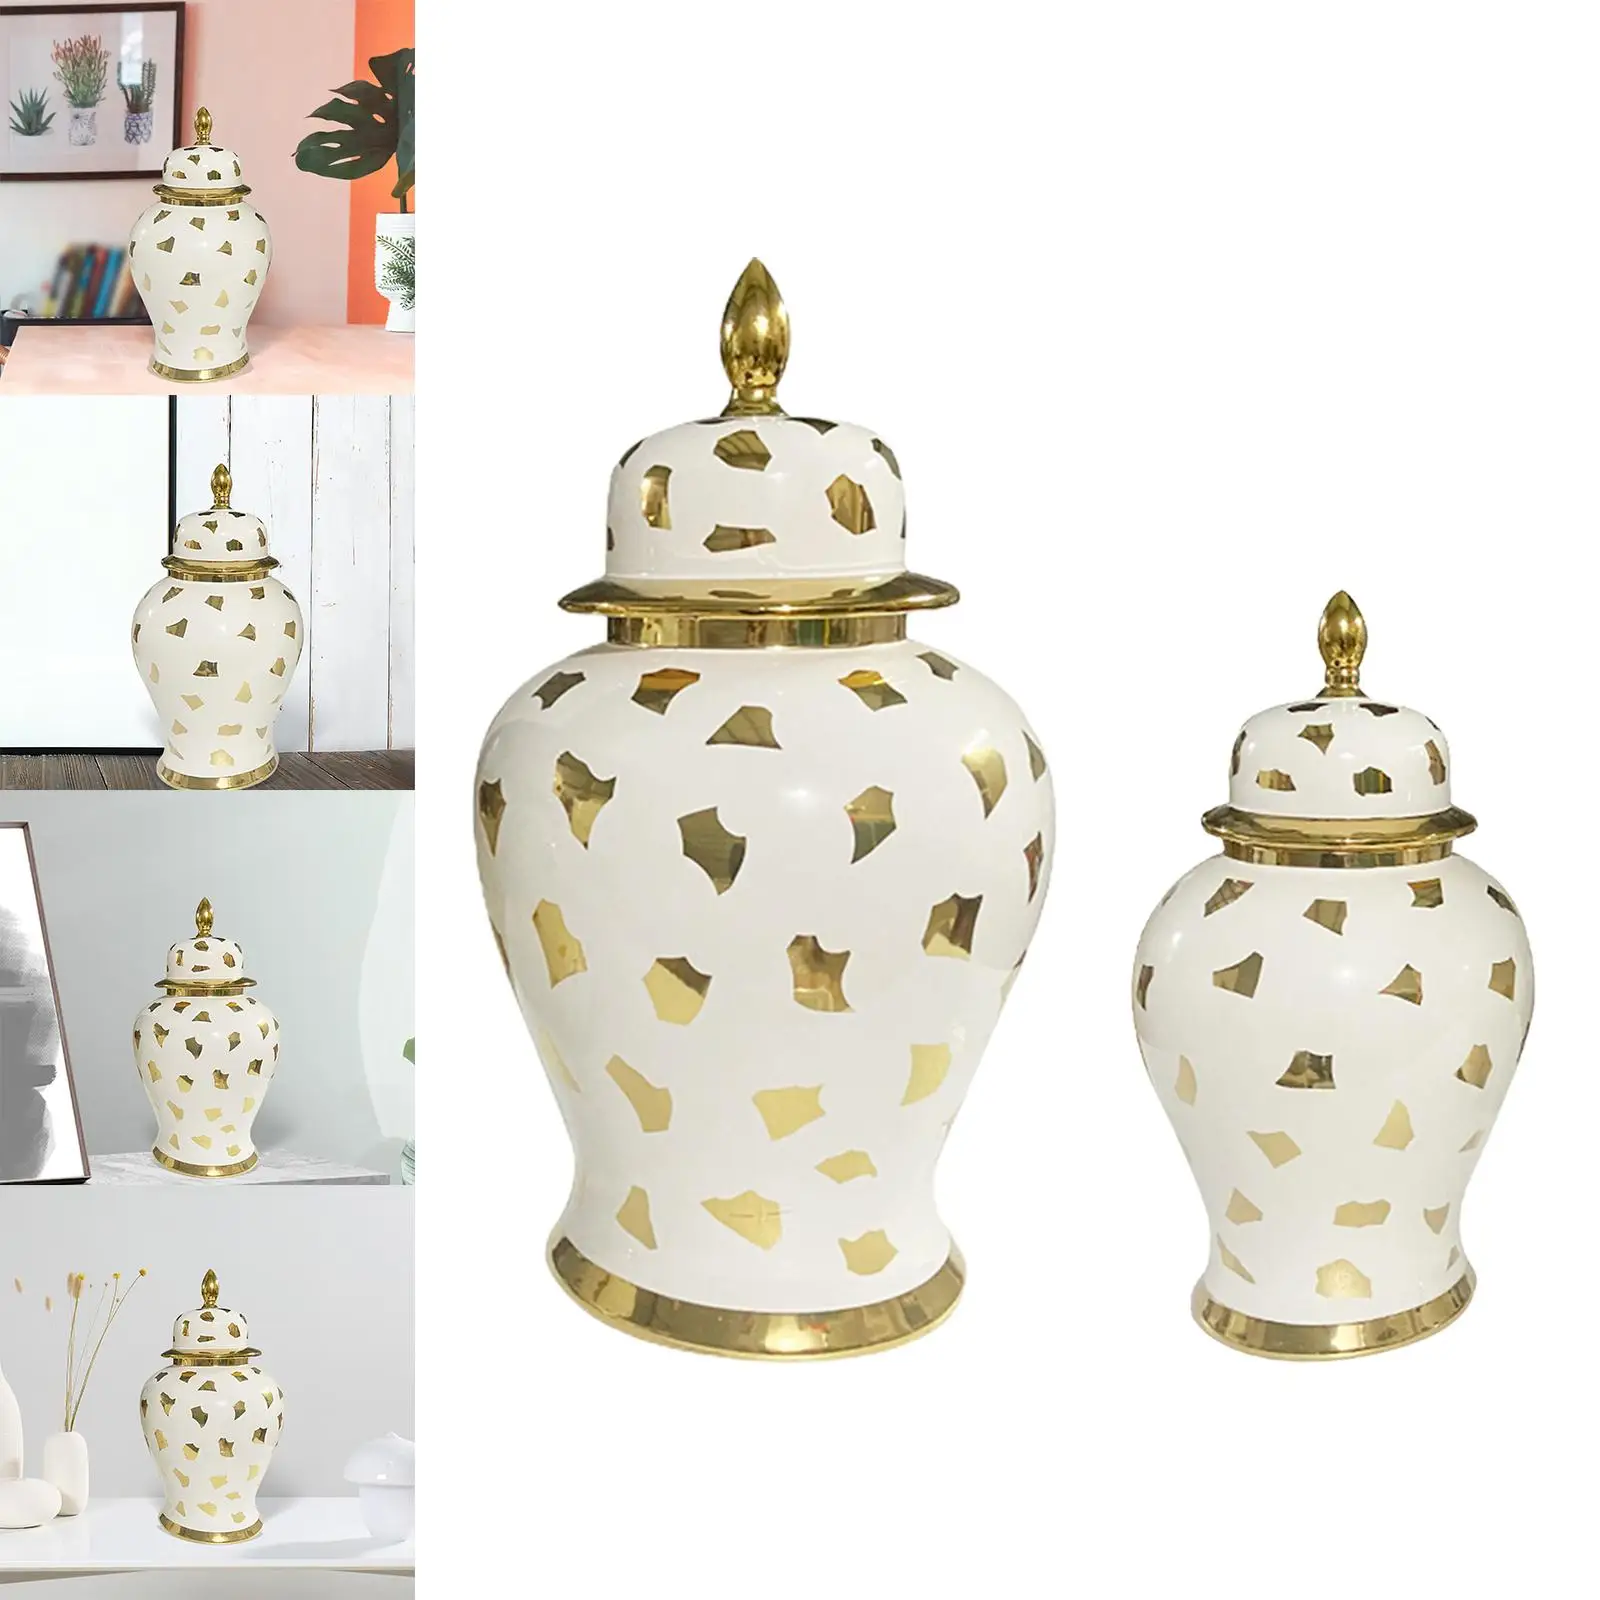 Classical Ceramic Ginger Jar Flower Vase Table Centerpiece for Home Decoration Gift